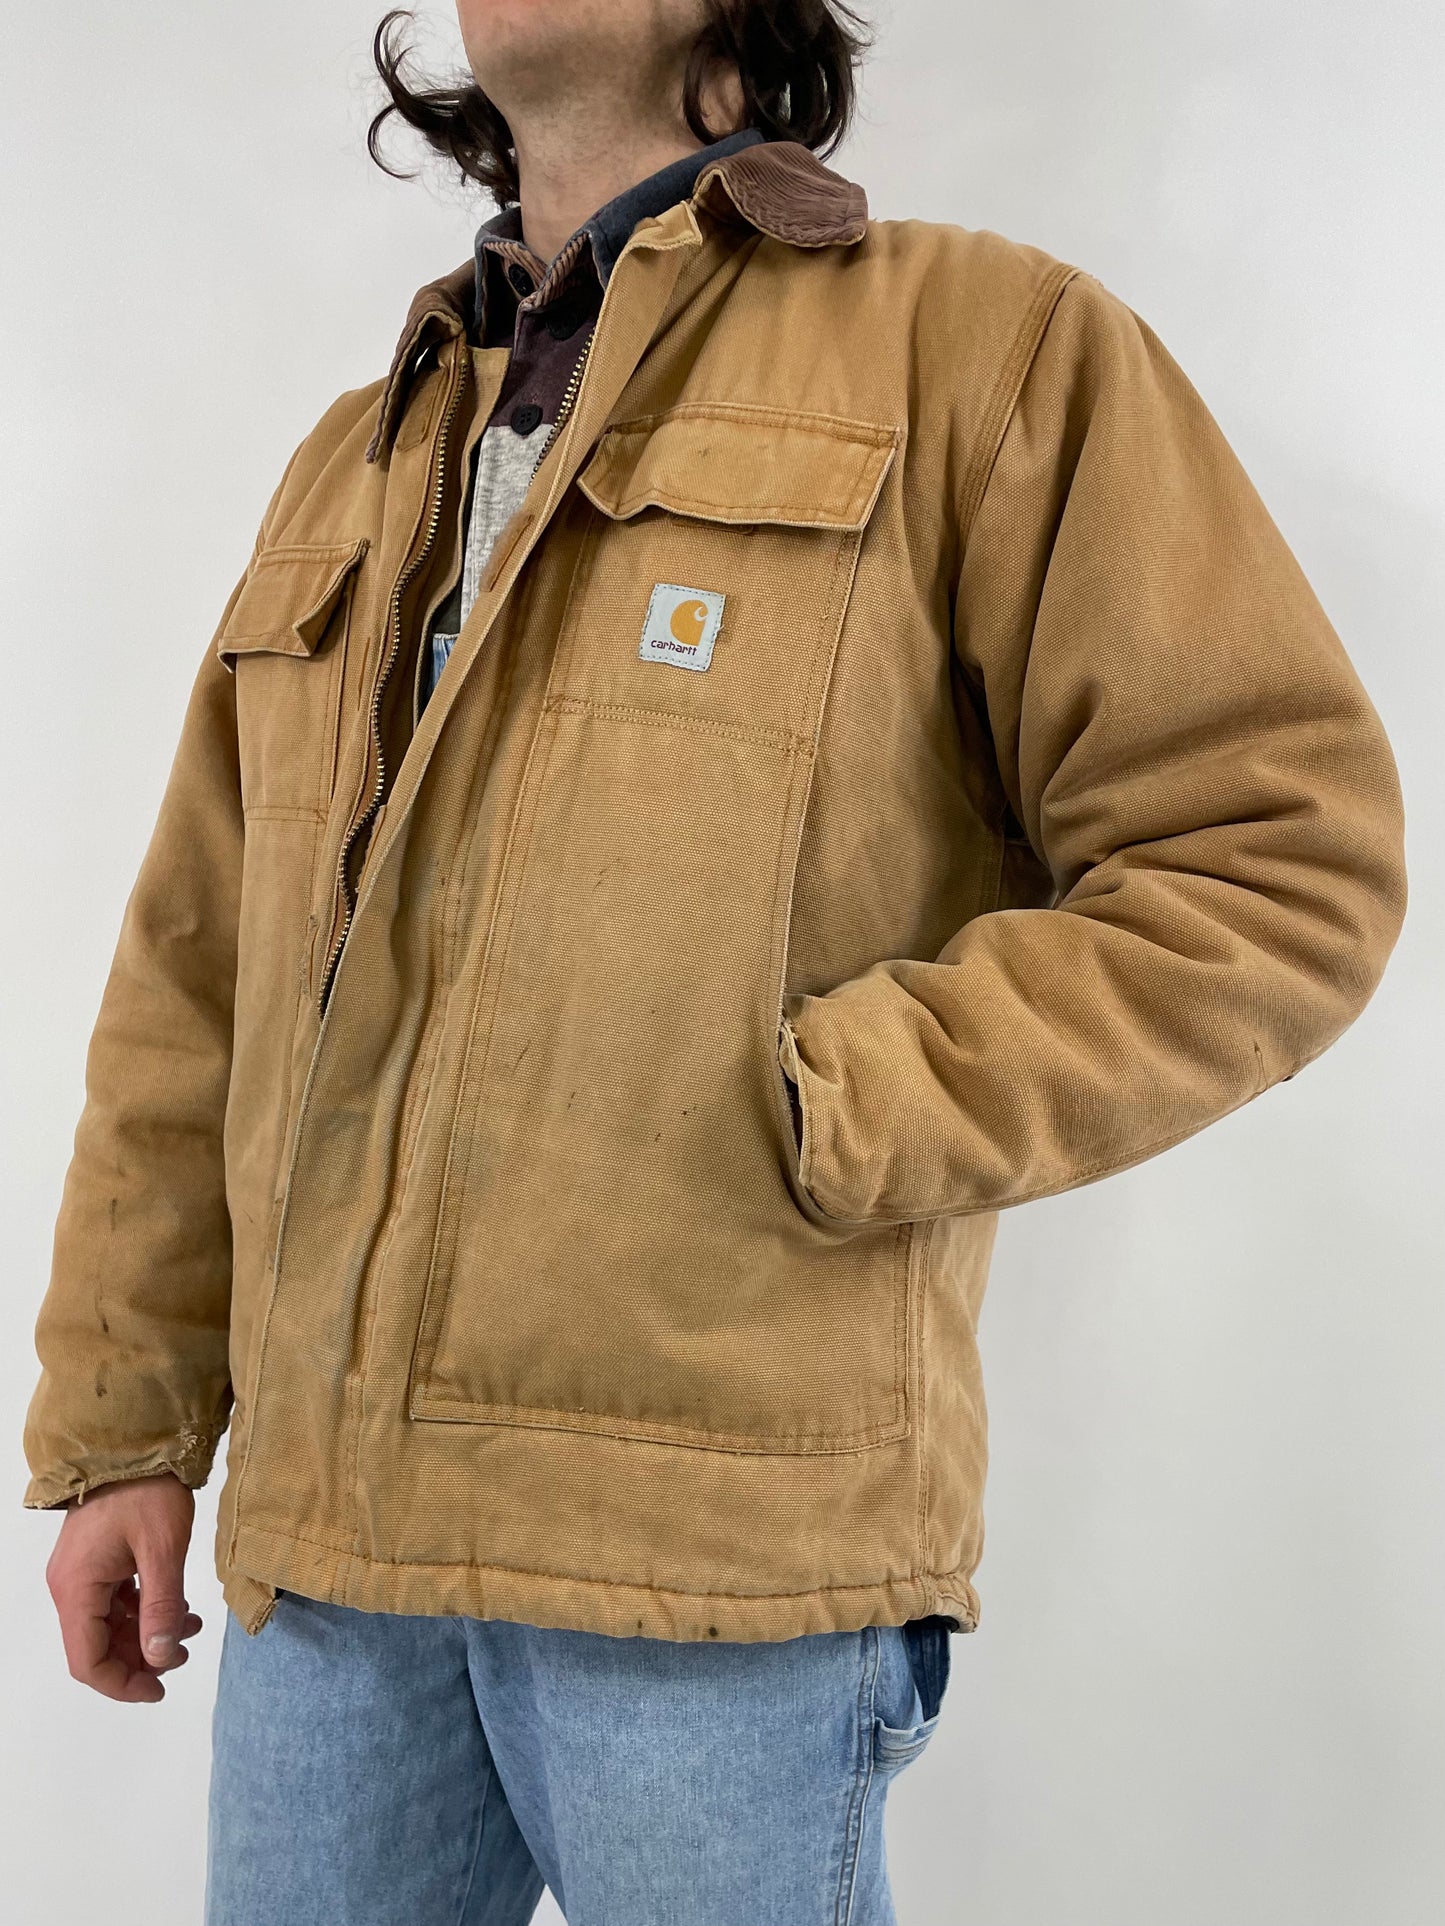 Carhartt Detroit Artic jacket 1997s